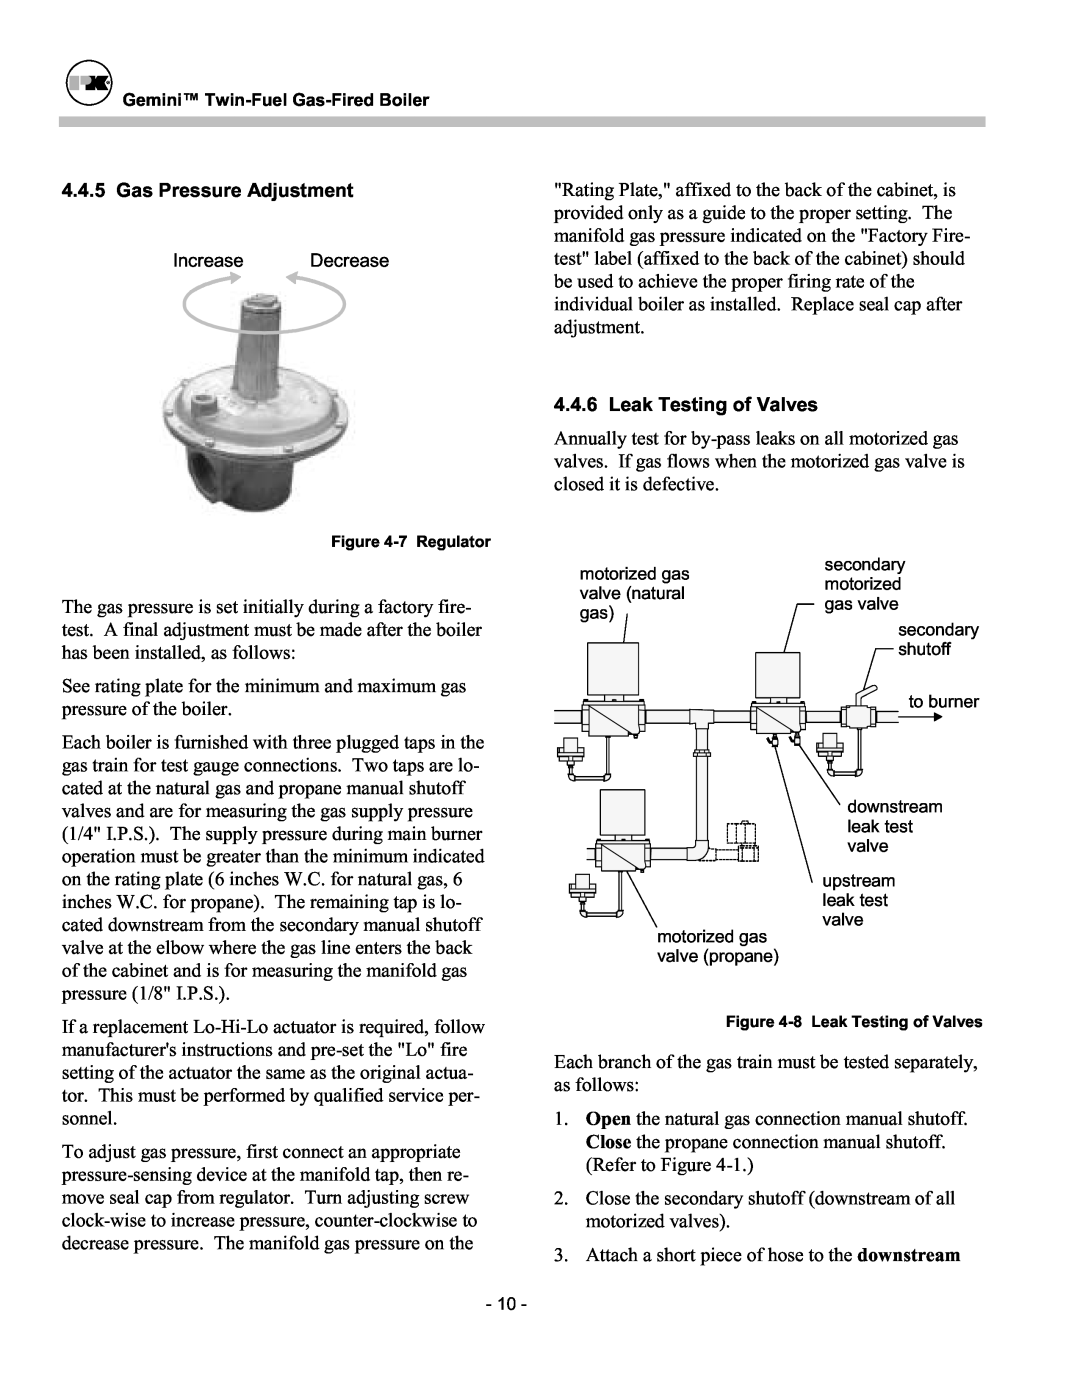 Patterson-Kelley TBIG-03 owner manual 4.4.5Gas Pressure Adjustment, Leak Testing of Valves 